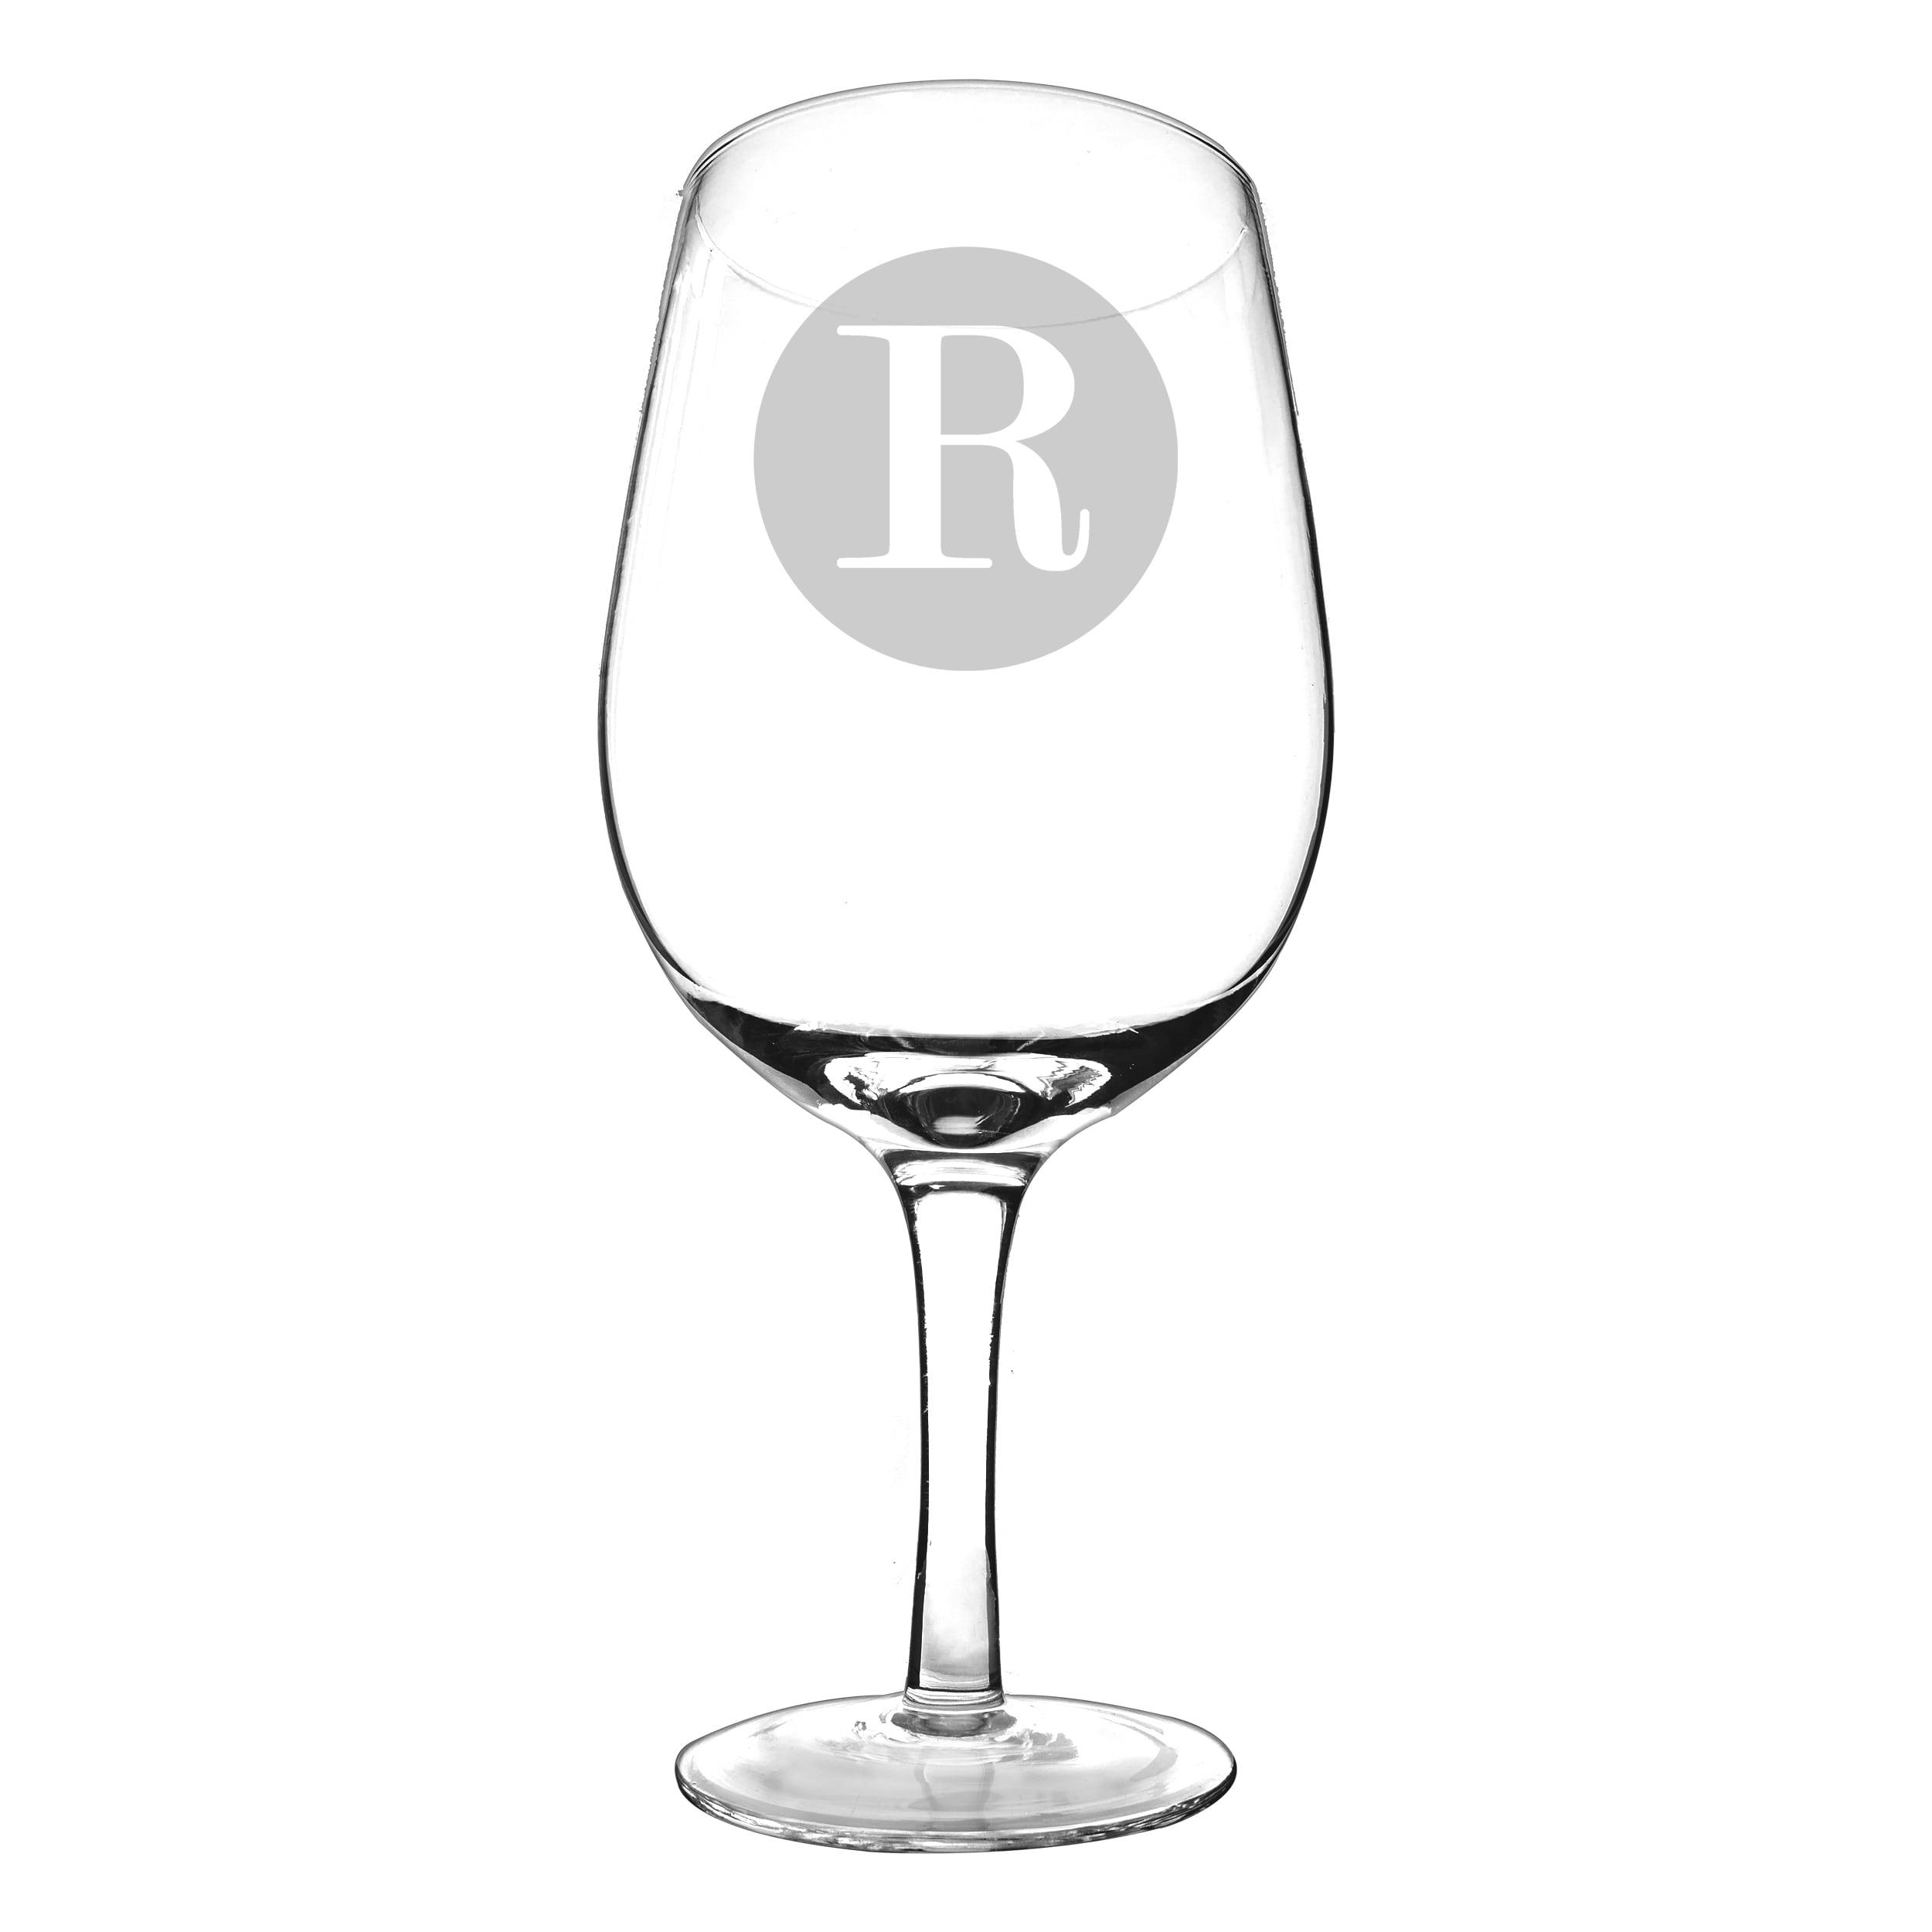 https://ak1.ostkcdn.com/images/products/10597035/Personalized-25-ounce-Novelty-XL-Wine-Glass-ad51190c-f97f-4ea5-9ef3-ba4bcd0eaf47.jpg